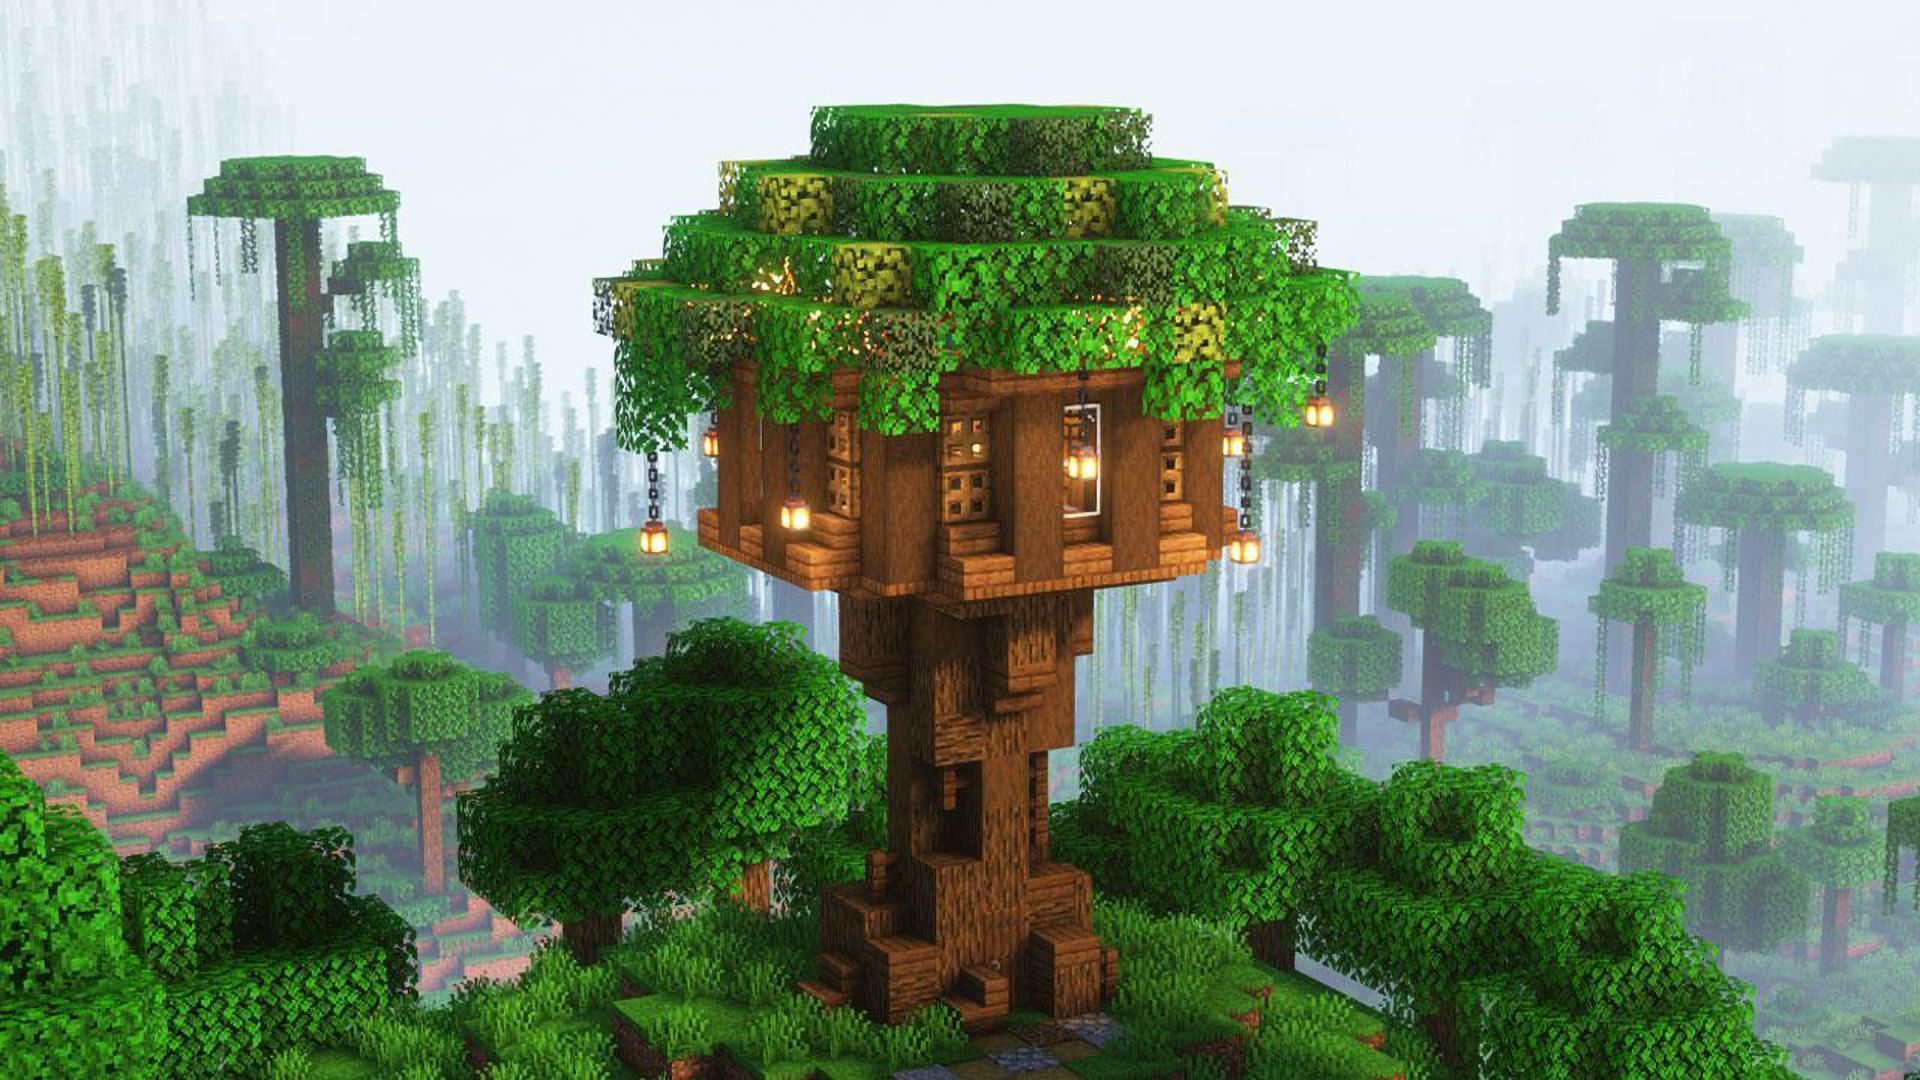 Explore the unique tree house builds in Minecraft (Image by u/EmikBuilds via Reddit r/Minecraft)